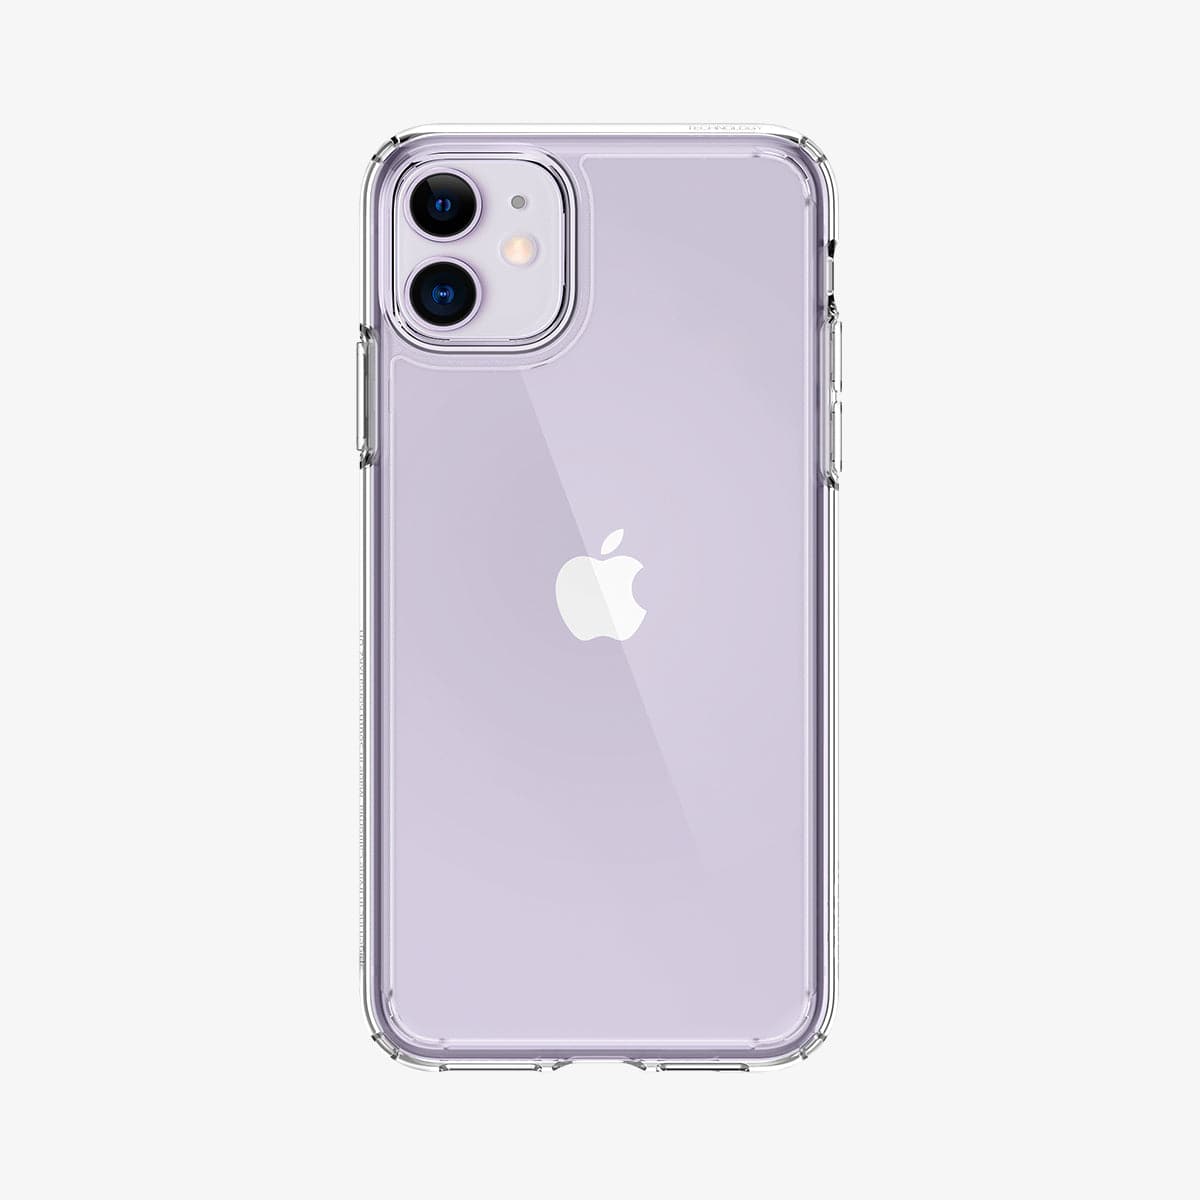 Spigen Ultra Hybrid Back Cover Case for iPhone 11 (TPU + Poly